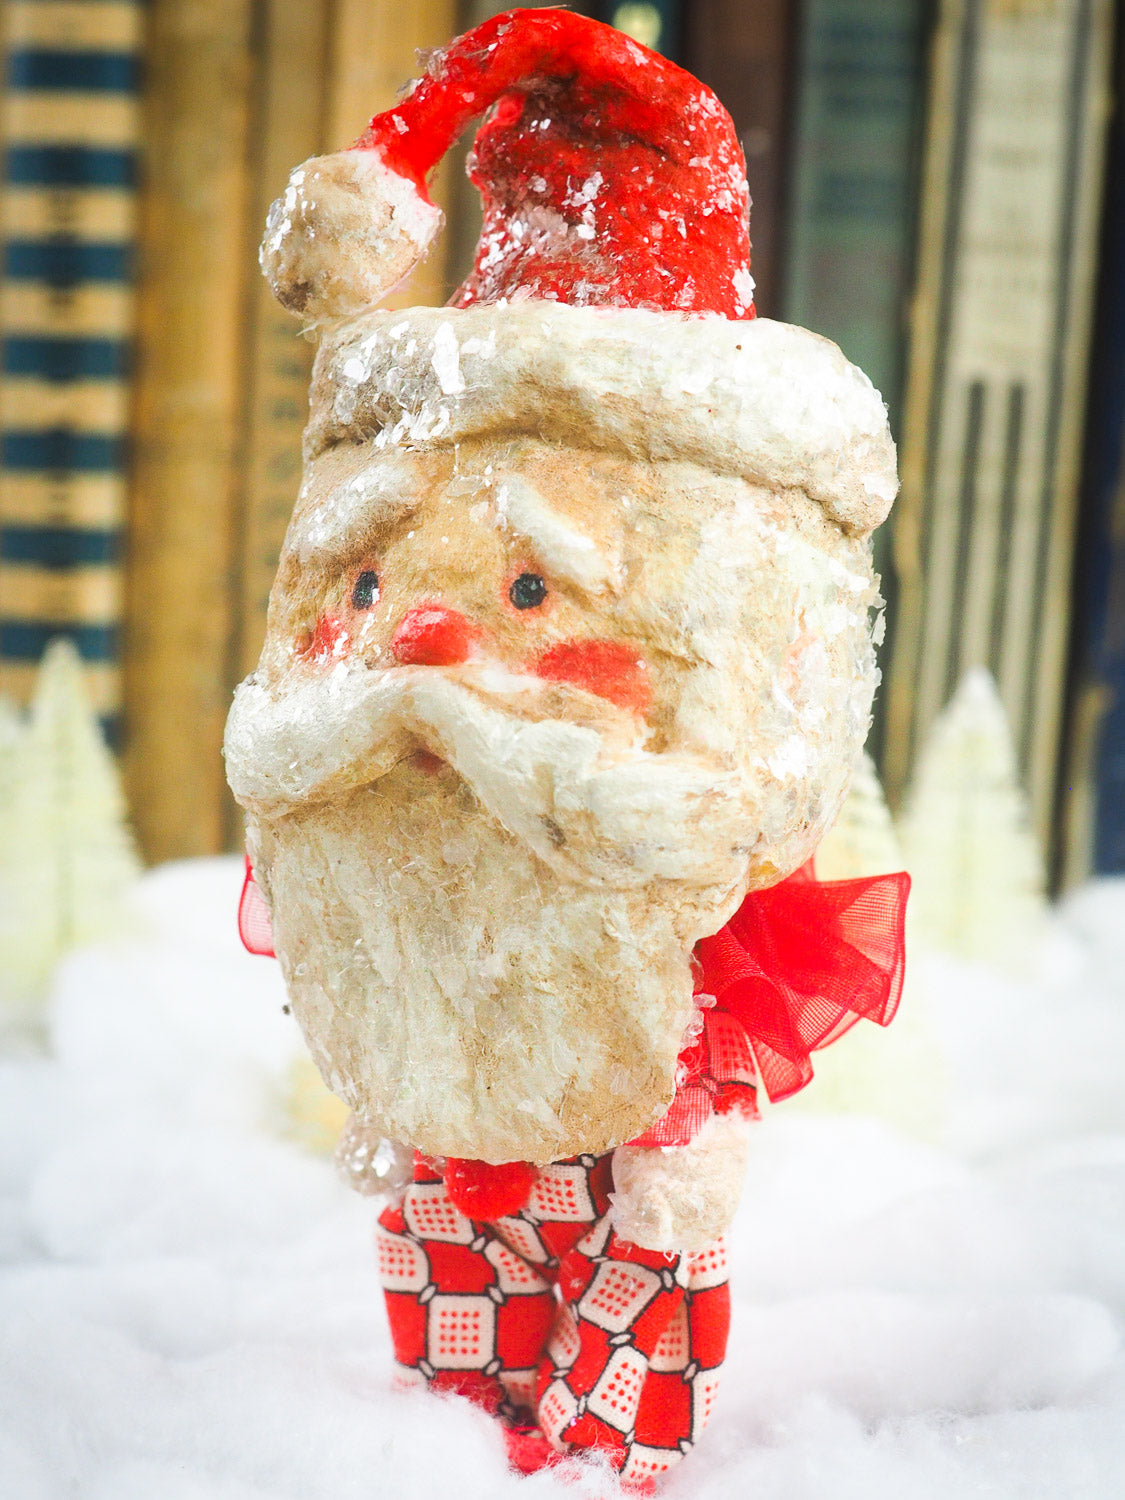 Handmade Christmas tree ornament Santa Claus doll by Danita. Whimsical folk art spun cotton home decor figurine for Holiday season, covered in vintage mica.